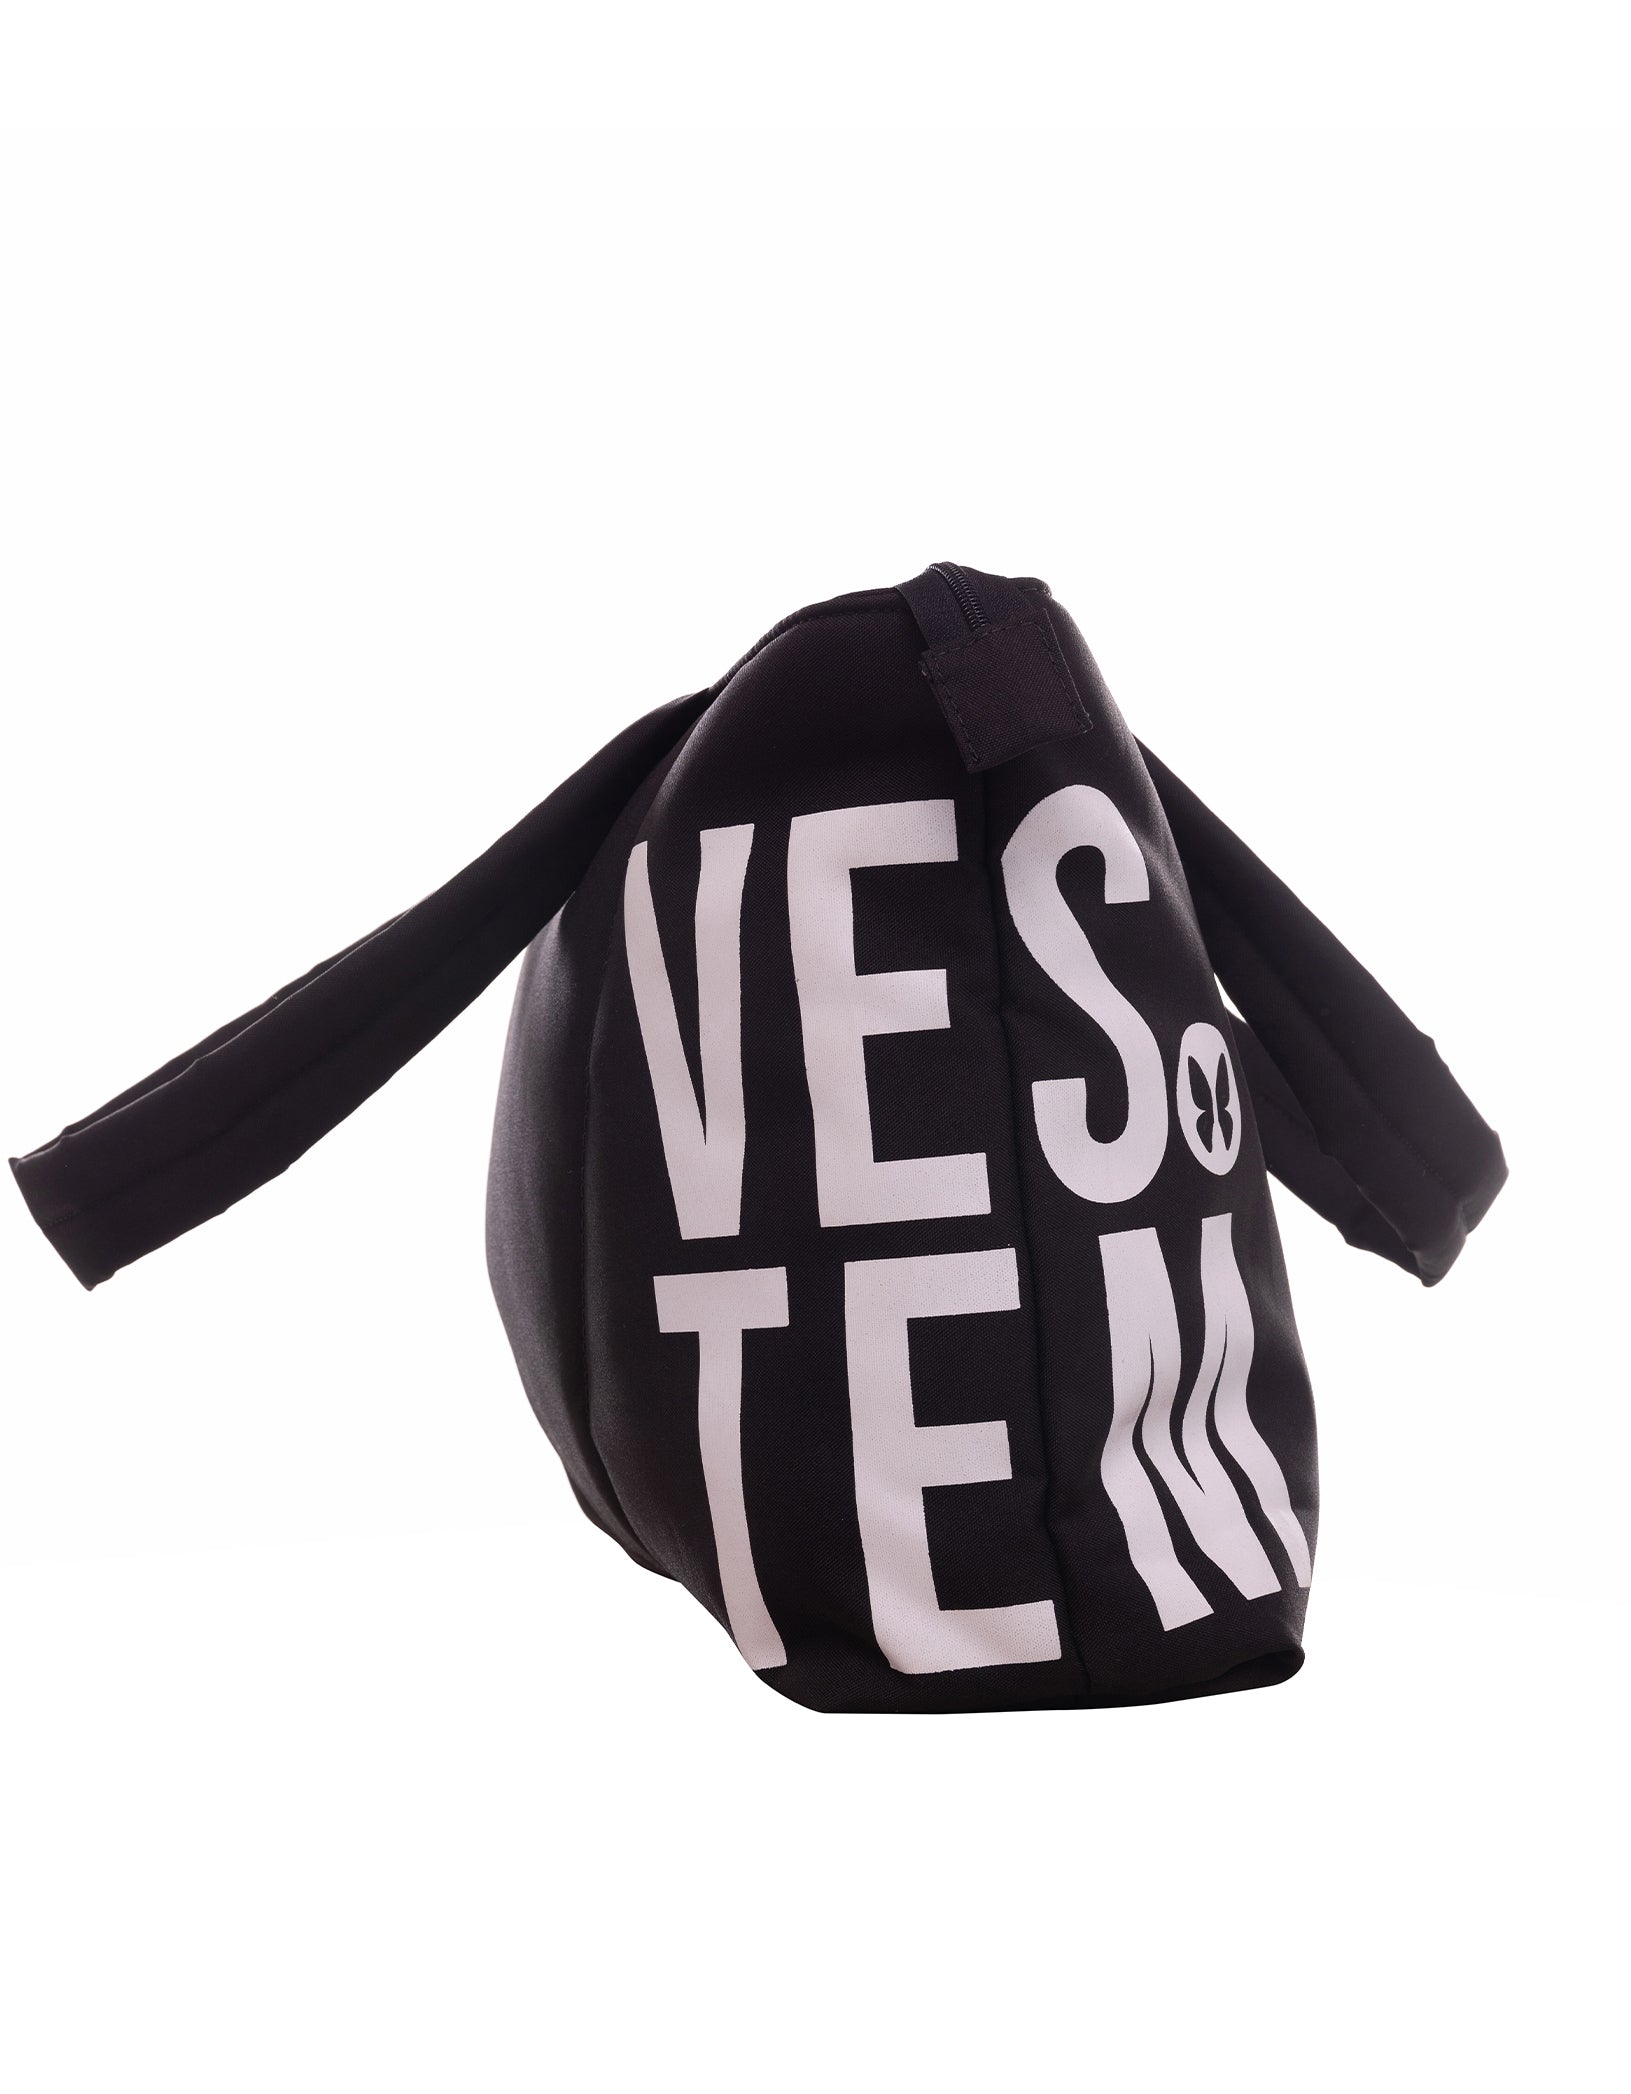 Vestem - Black Ubatuba Hand Bag - BOL41C0002